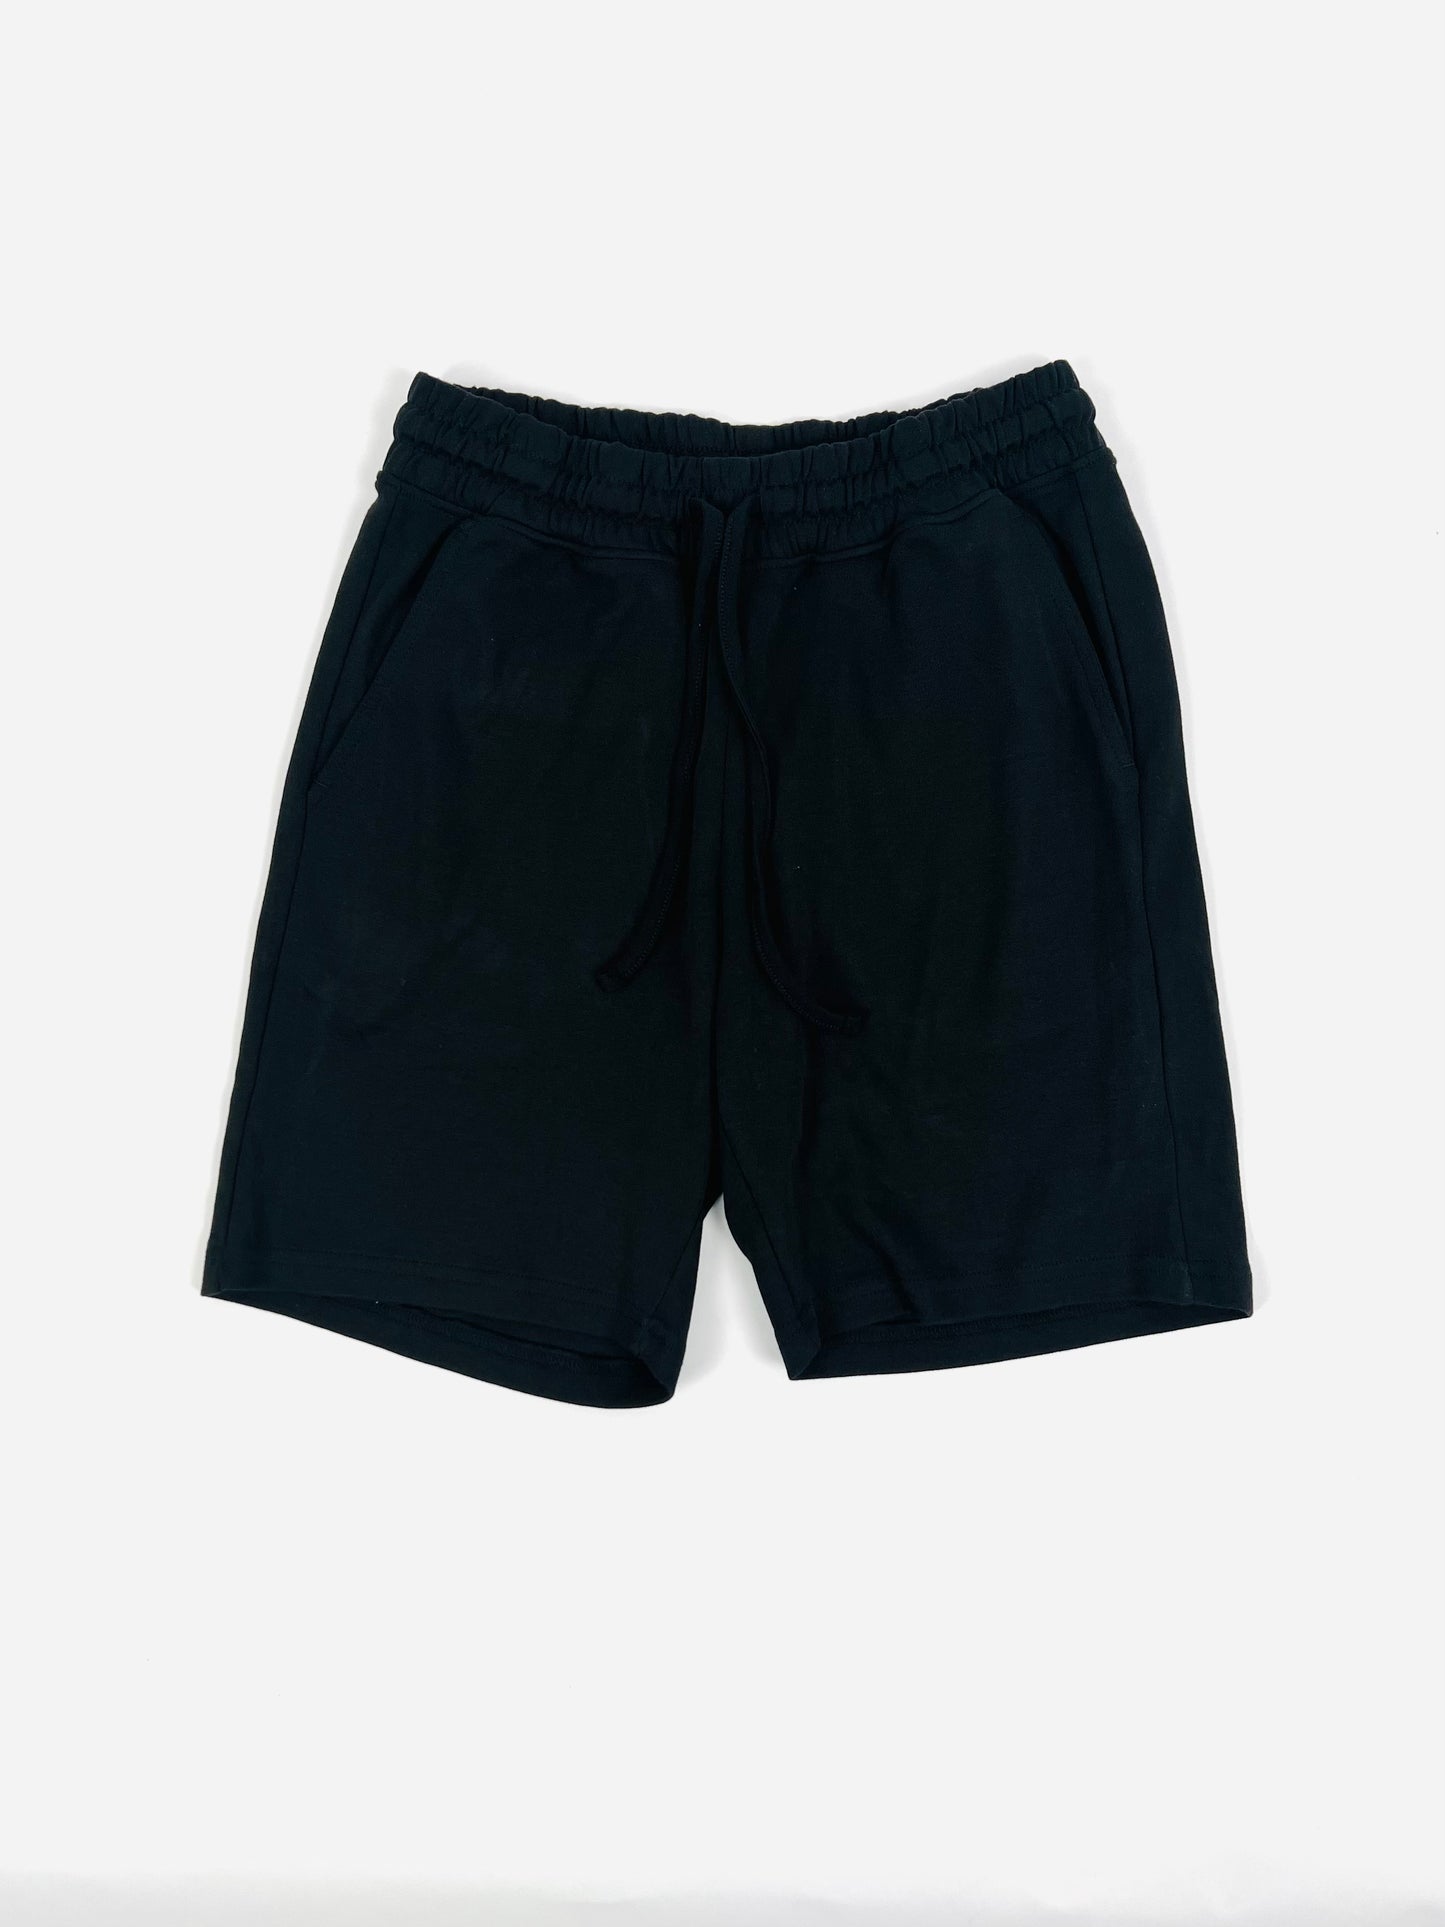 Housebrand invincible print shorts in black